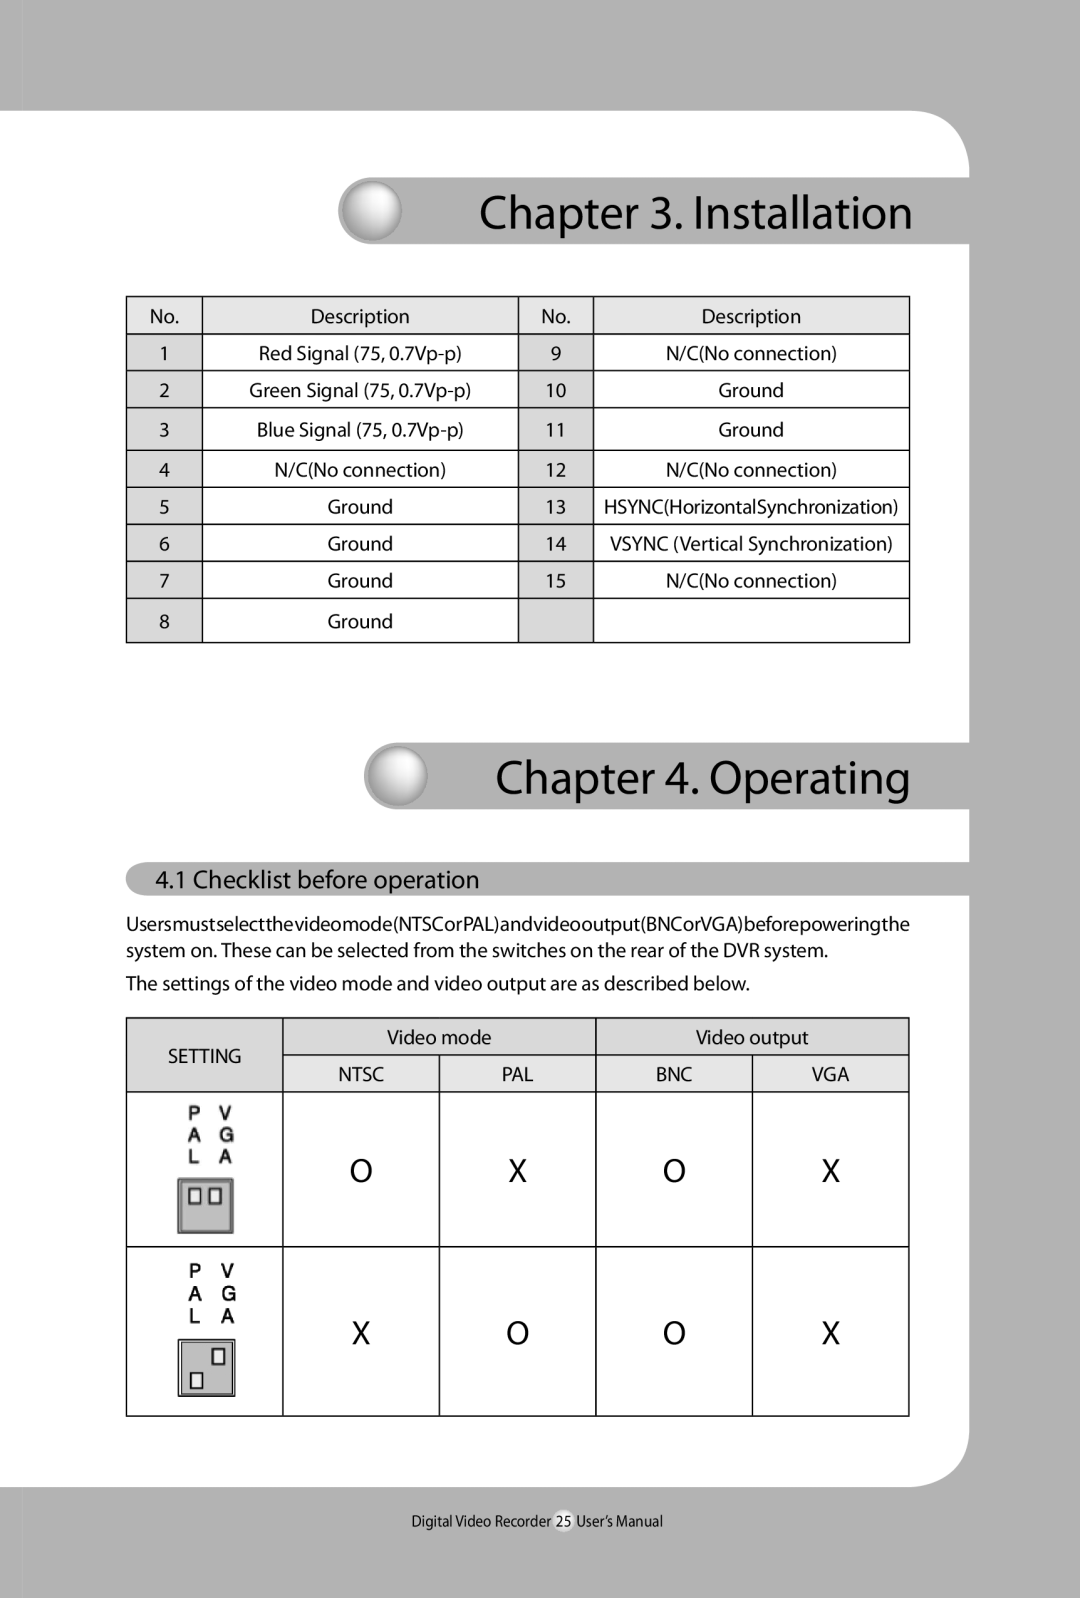 Samsung 450, SVR-940 user manual Operating, Checklist before operation, Setting, Pal, Vga 